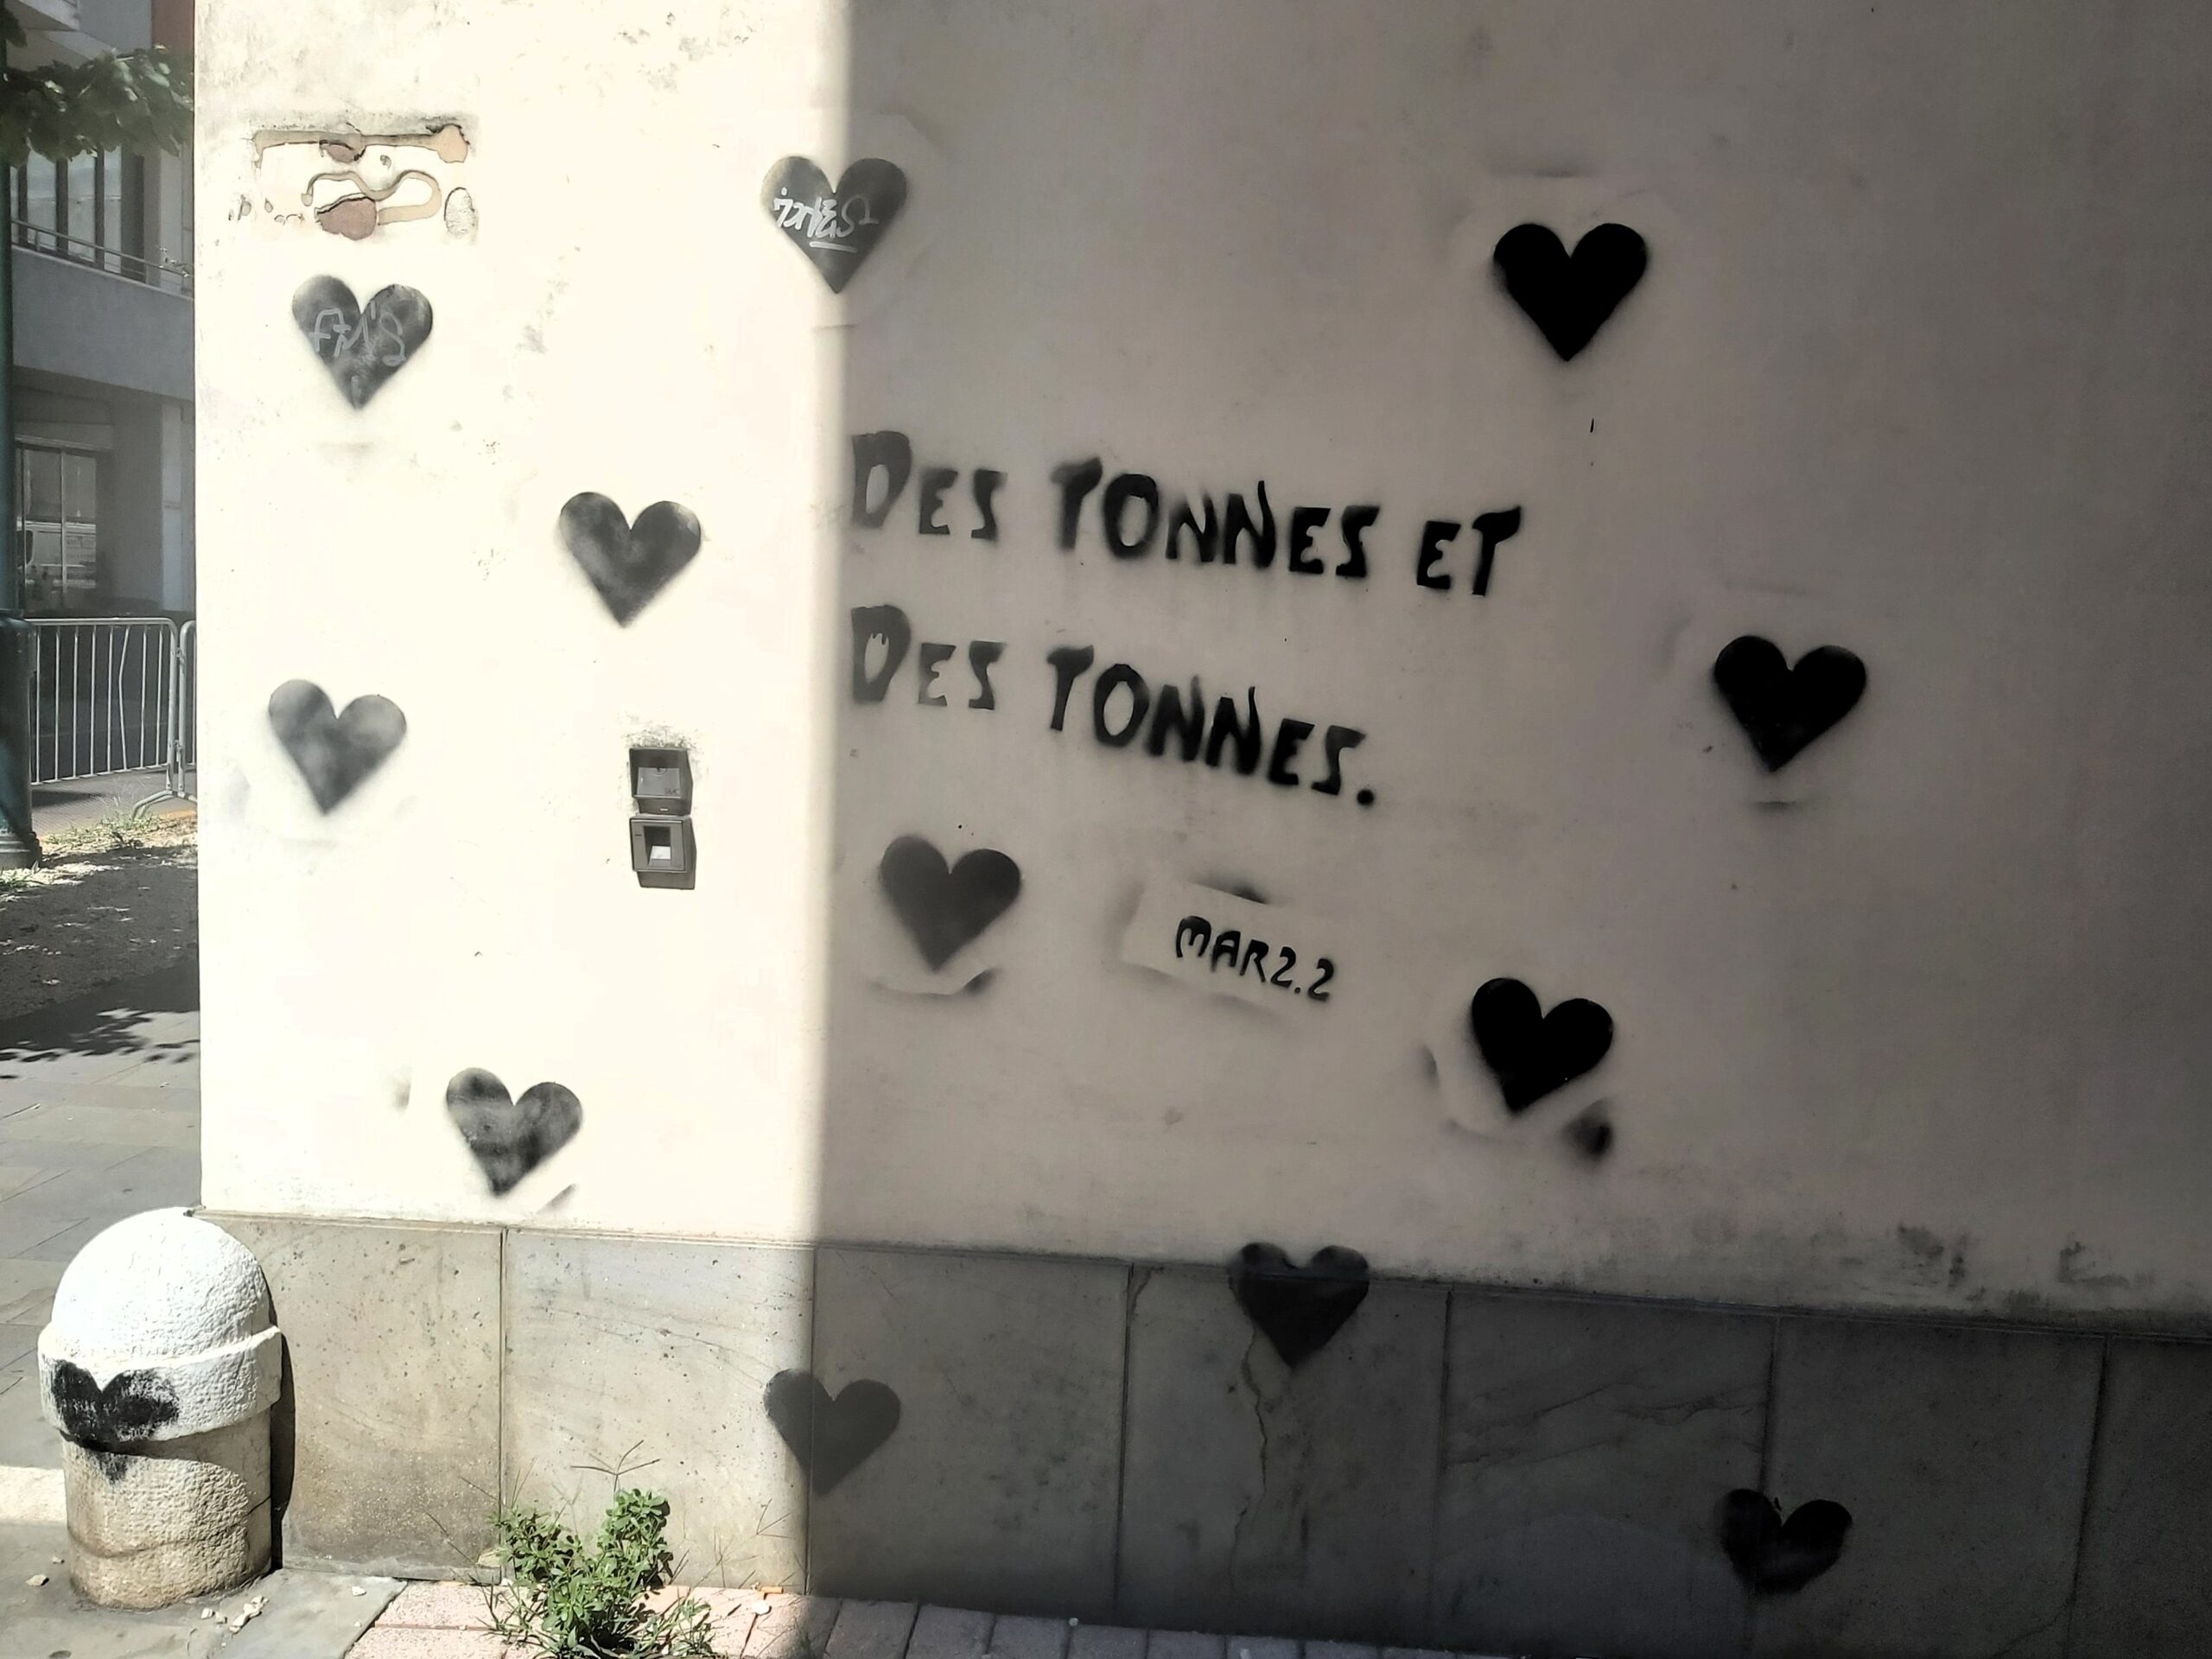 Street art written in French but found in Mestre, Italy